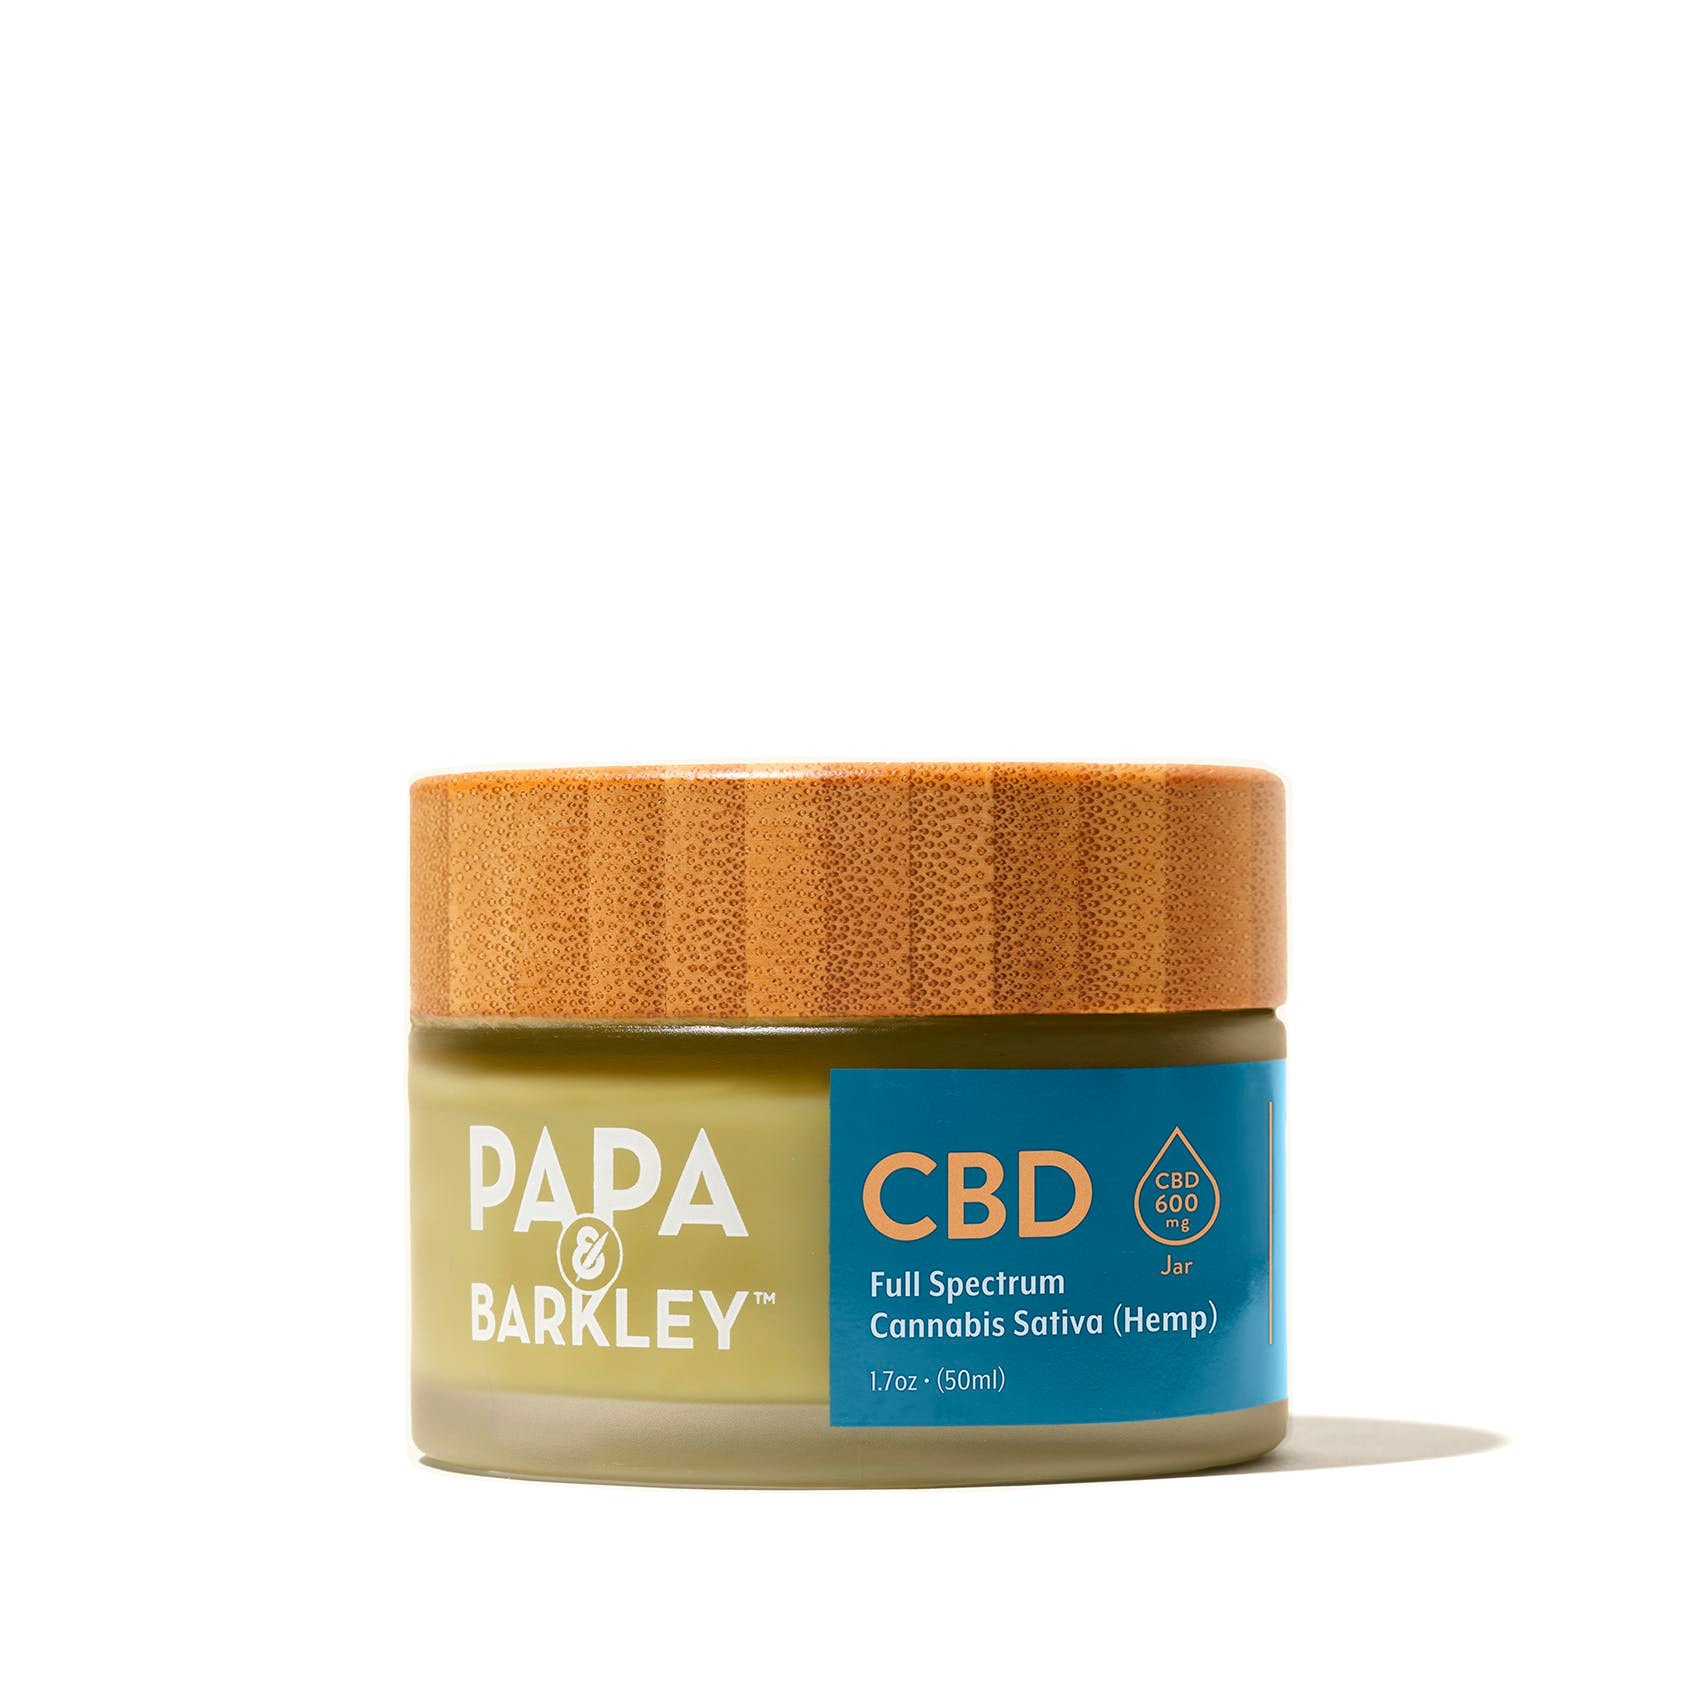 Papa & Barkley, CBD Releaf Balm, Full Spectrum, 1.7oz, 600mg CBD